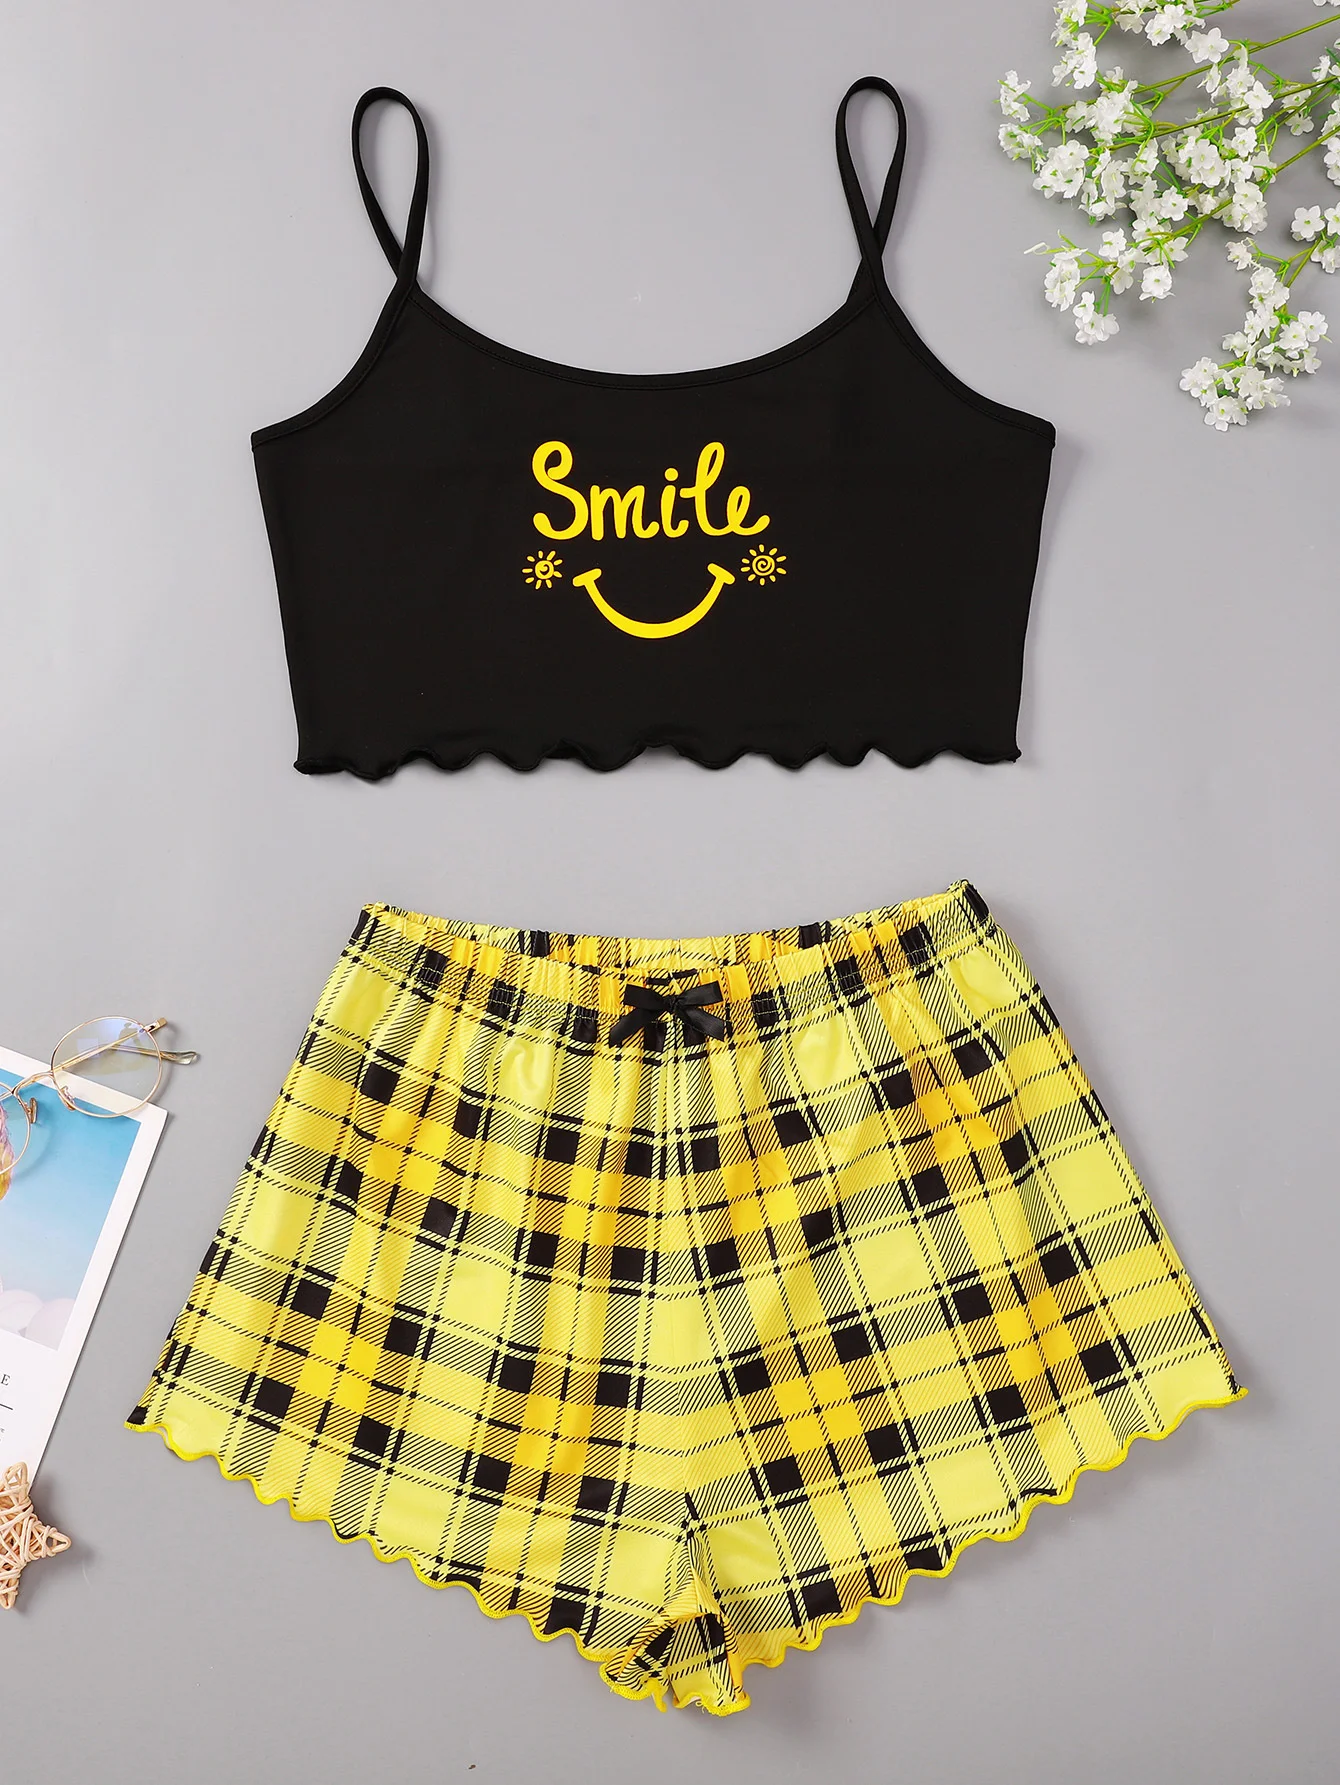 

New Style Lady’s Summer Cartoon Smile Print Camisole With Yellow Grid Silk Shorts Pajama Set Home Wear Sleepwear Underwear